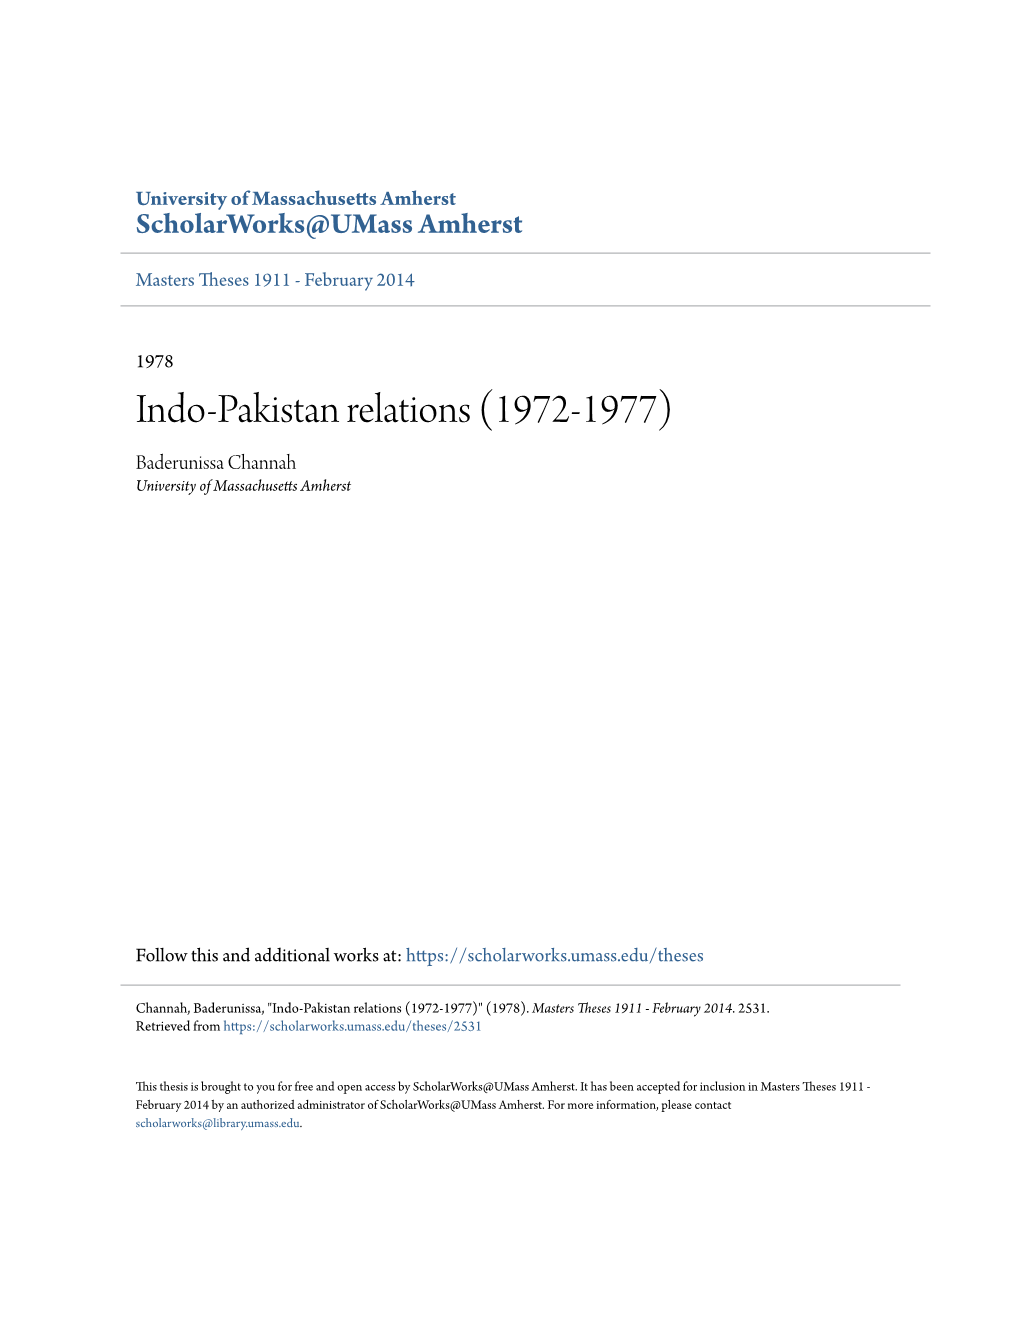 Indo-Pakistan Relations (1972-1977) Baderunissa Channah University of Massachusetts Amherst